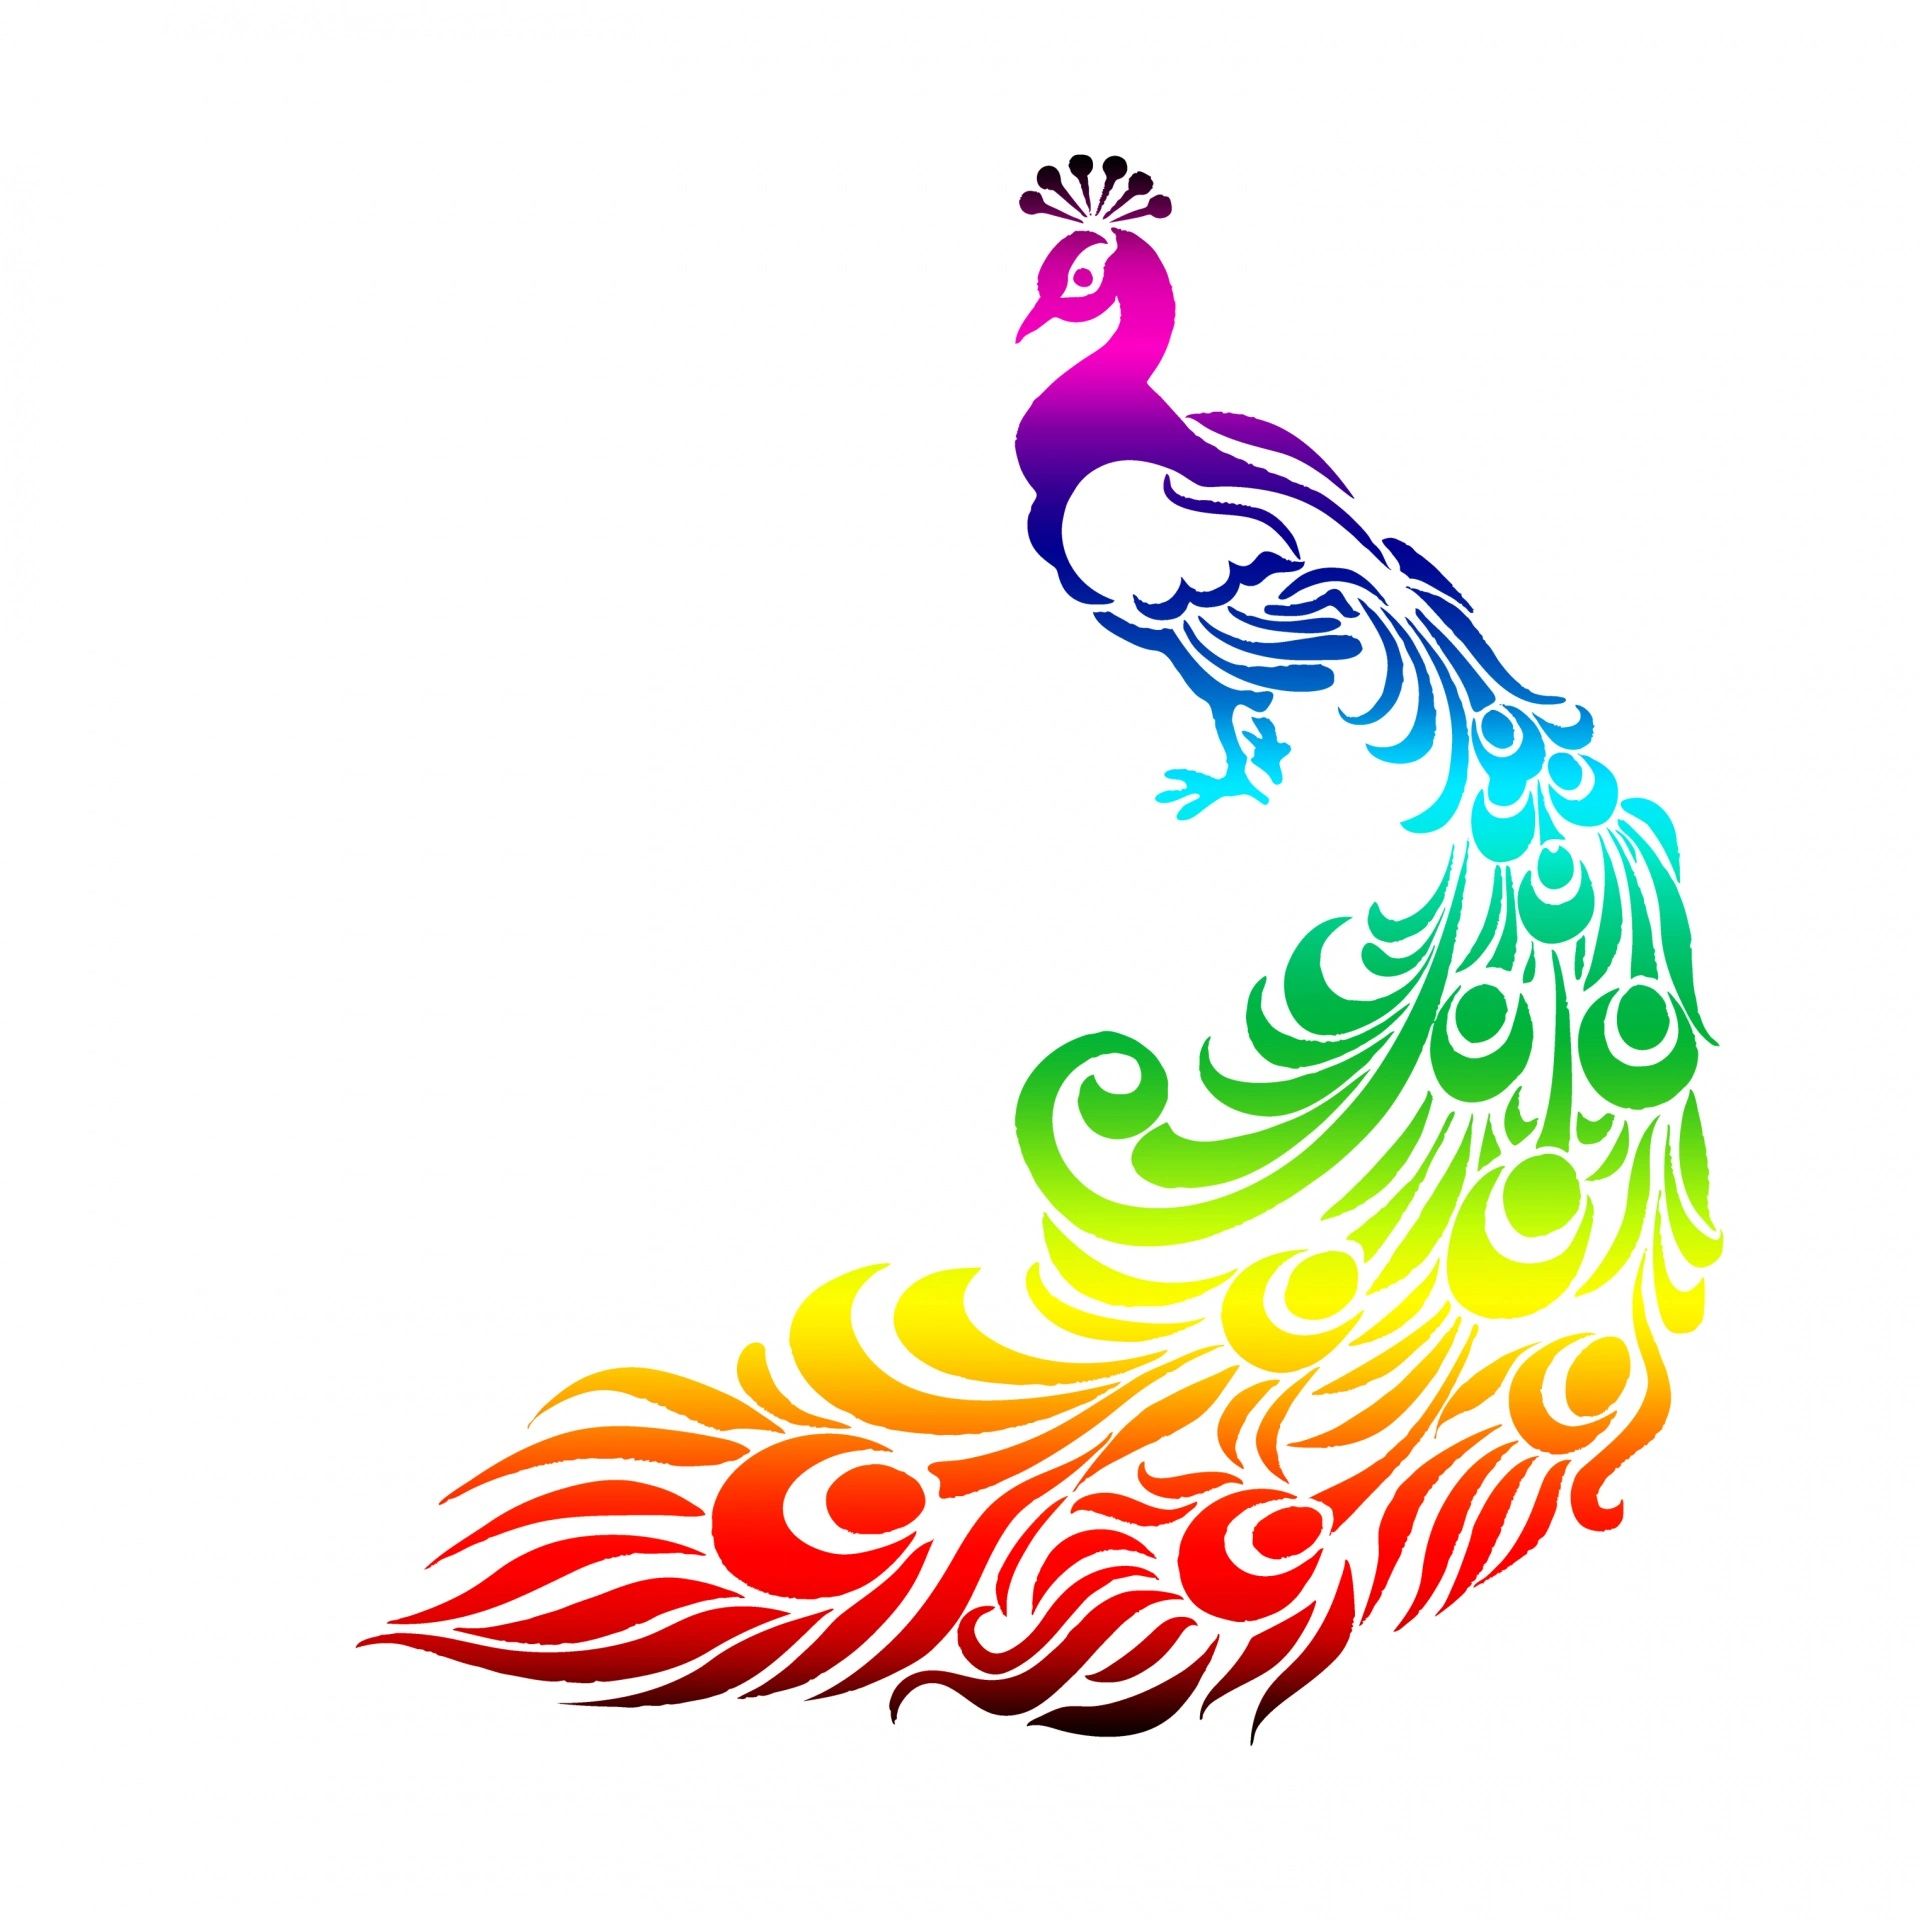 Rainbow peacock gives hope to Ugandan LGBTI+ individuals impacted by Uganda's Anti-Homosexuality Act